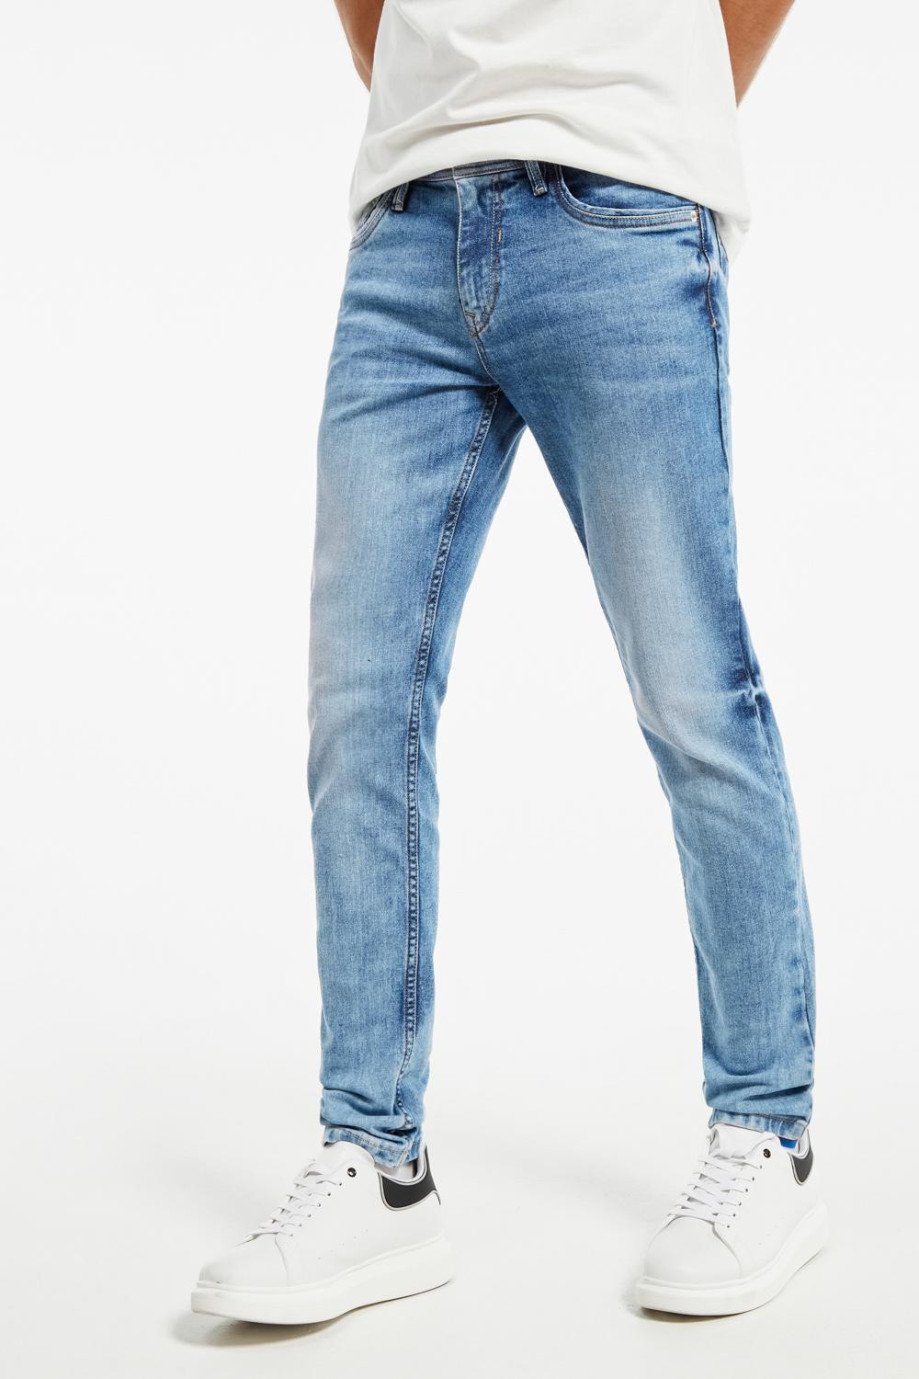 Jean skinny azul claro con ajuste ceñido, bolsillos y tiro bajo